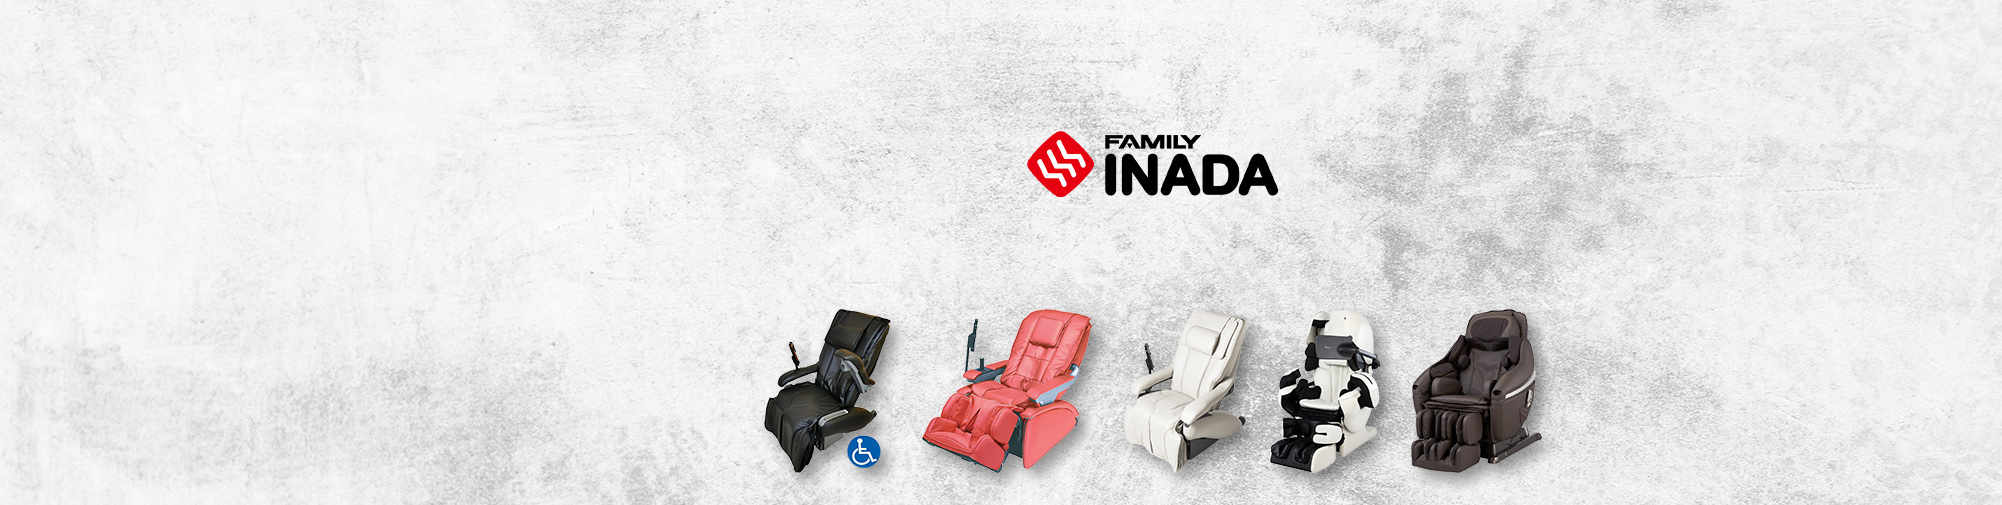 Family Inada – japanisches Traditionsunternehmen | Massagesessel Welt